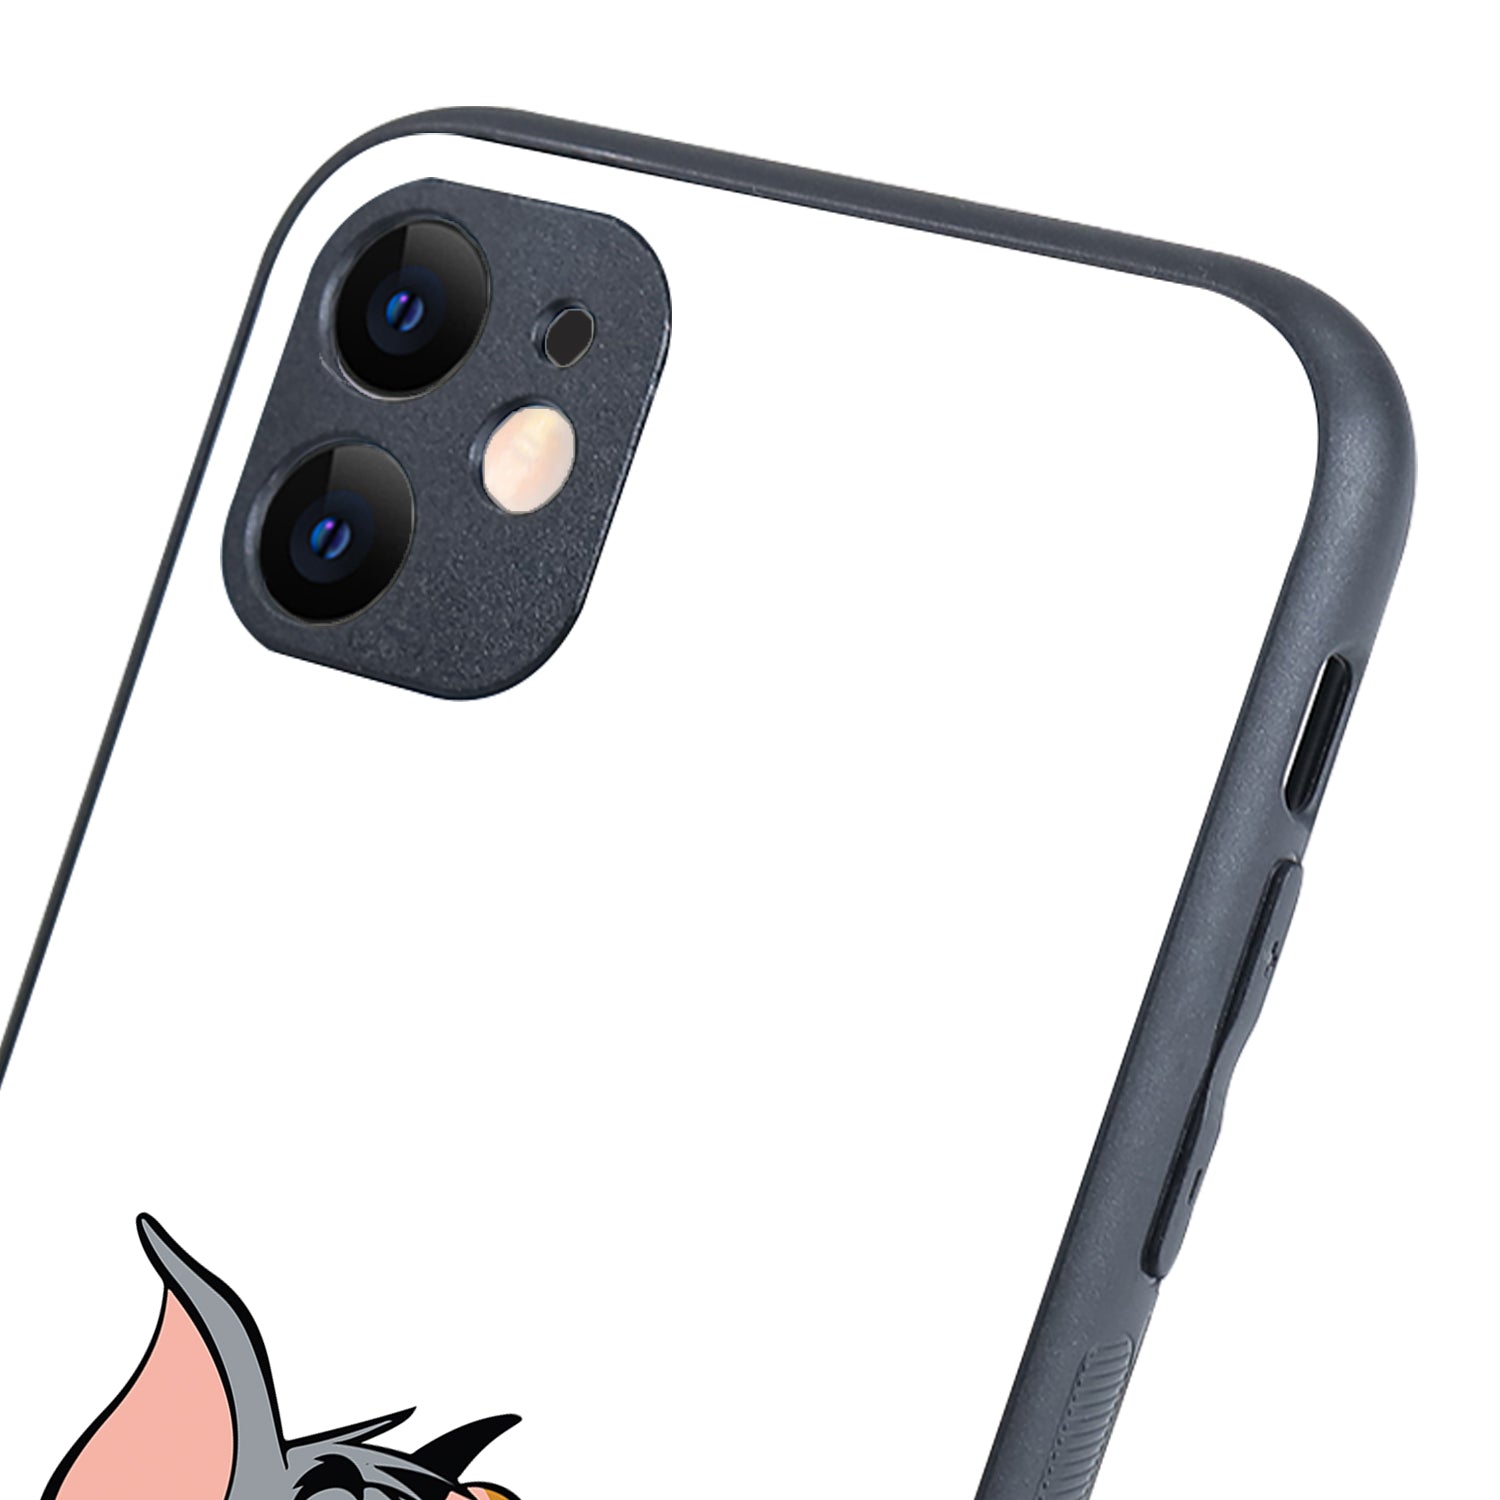 Tom &amp; Jerry Cartoon iPhone 11 Case